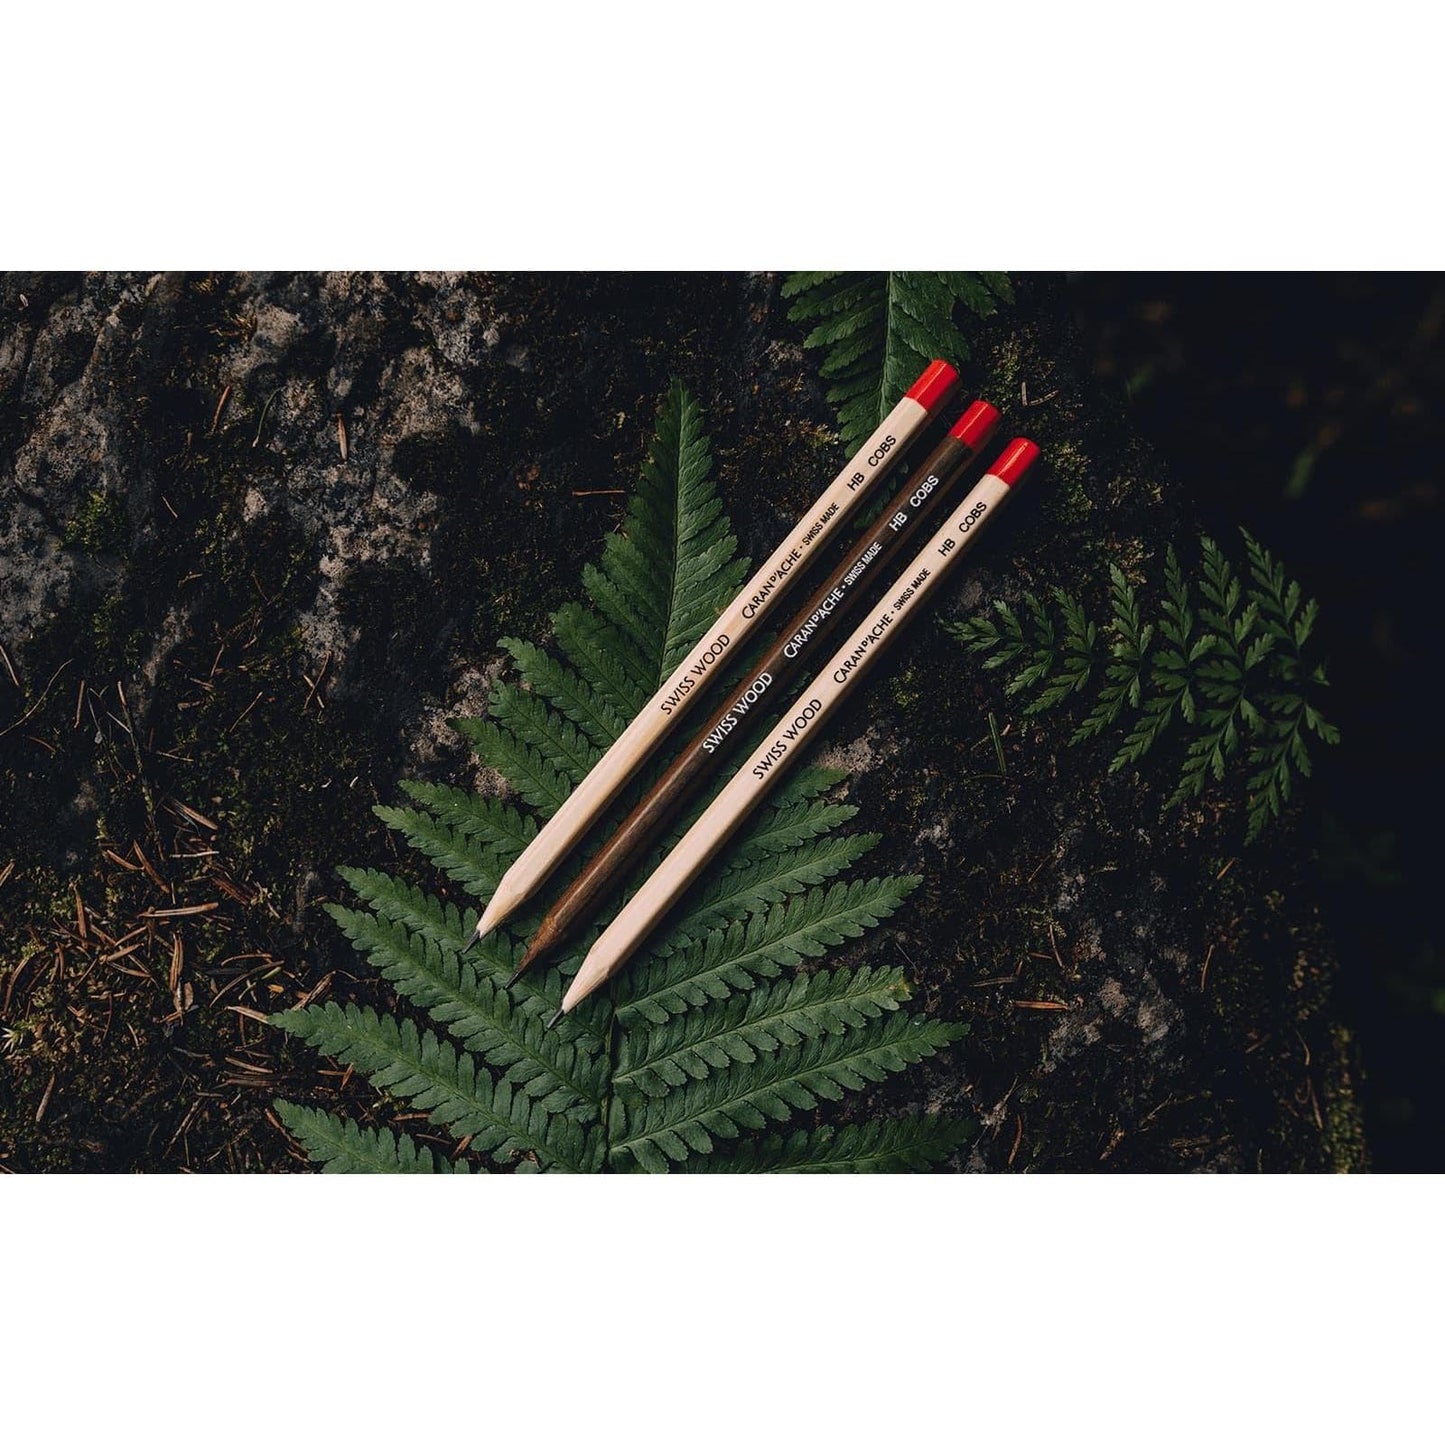 Caran D'Ache Swiss Wood Three Pencil Gift Set lifestyle